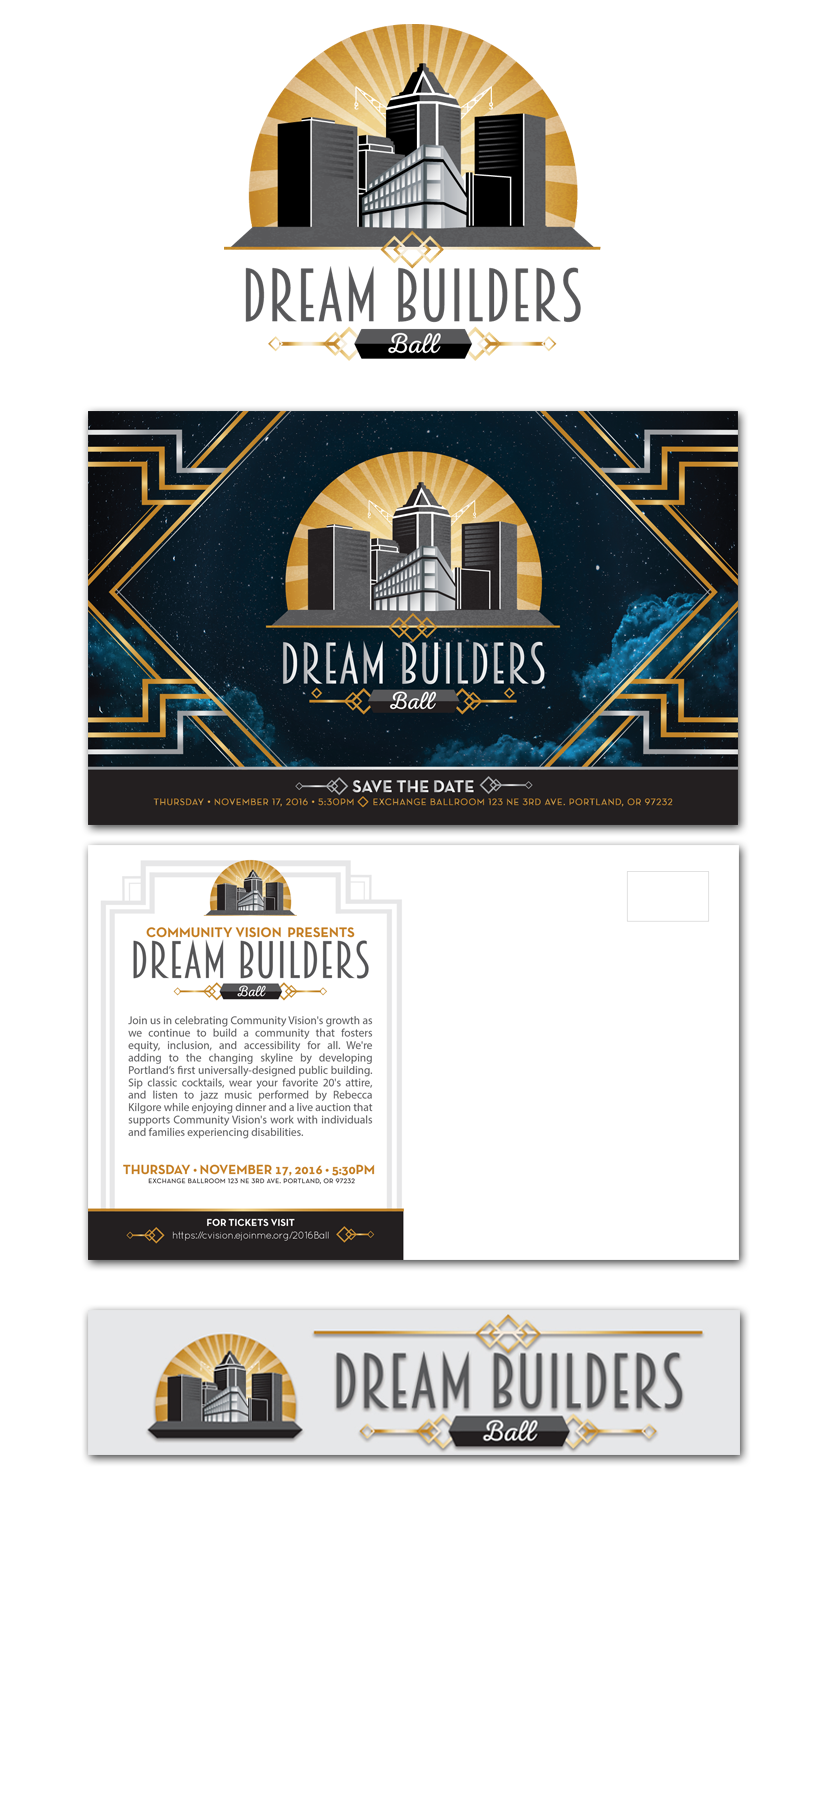 Dream Builders Ball MEK Design A Creative Agency